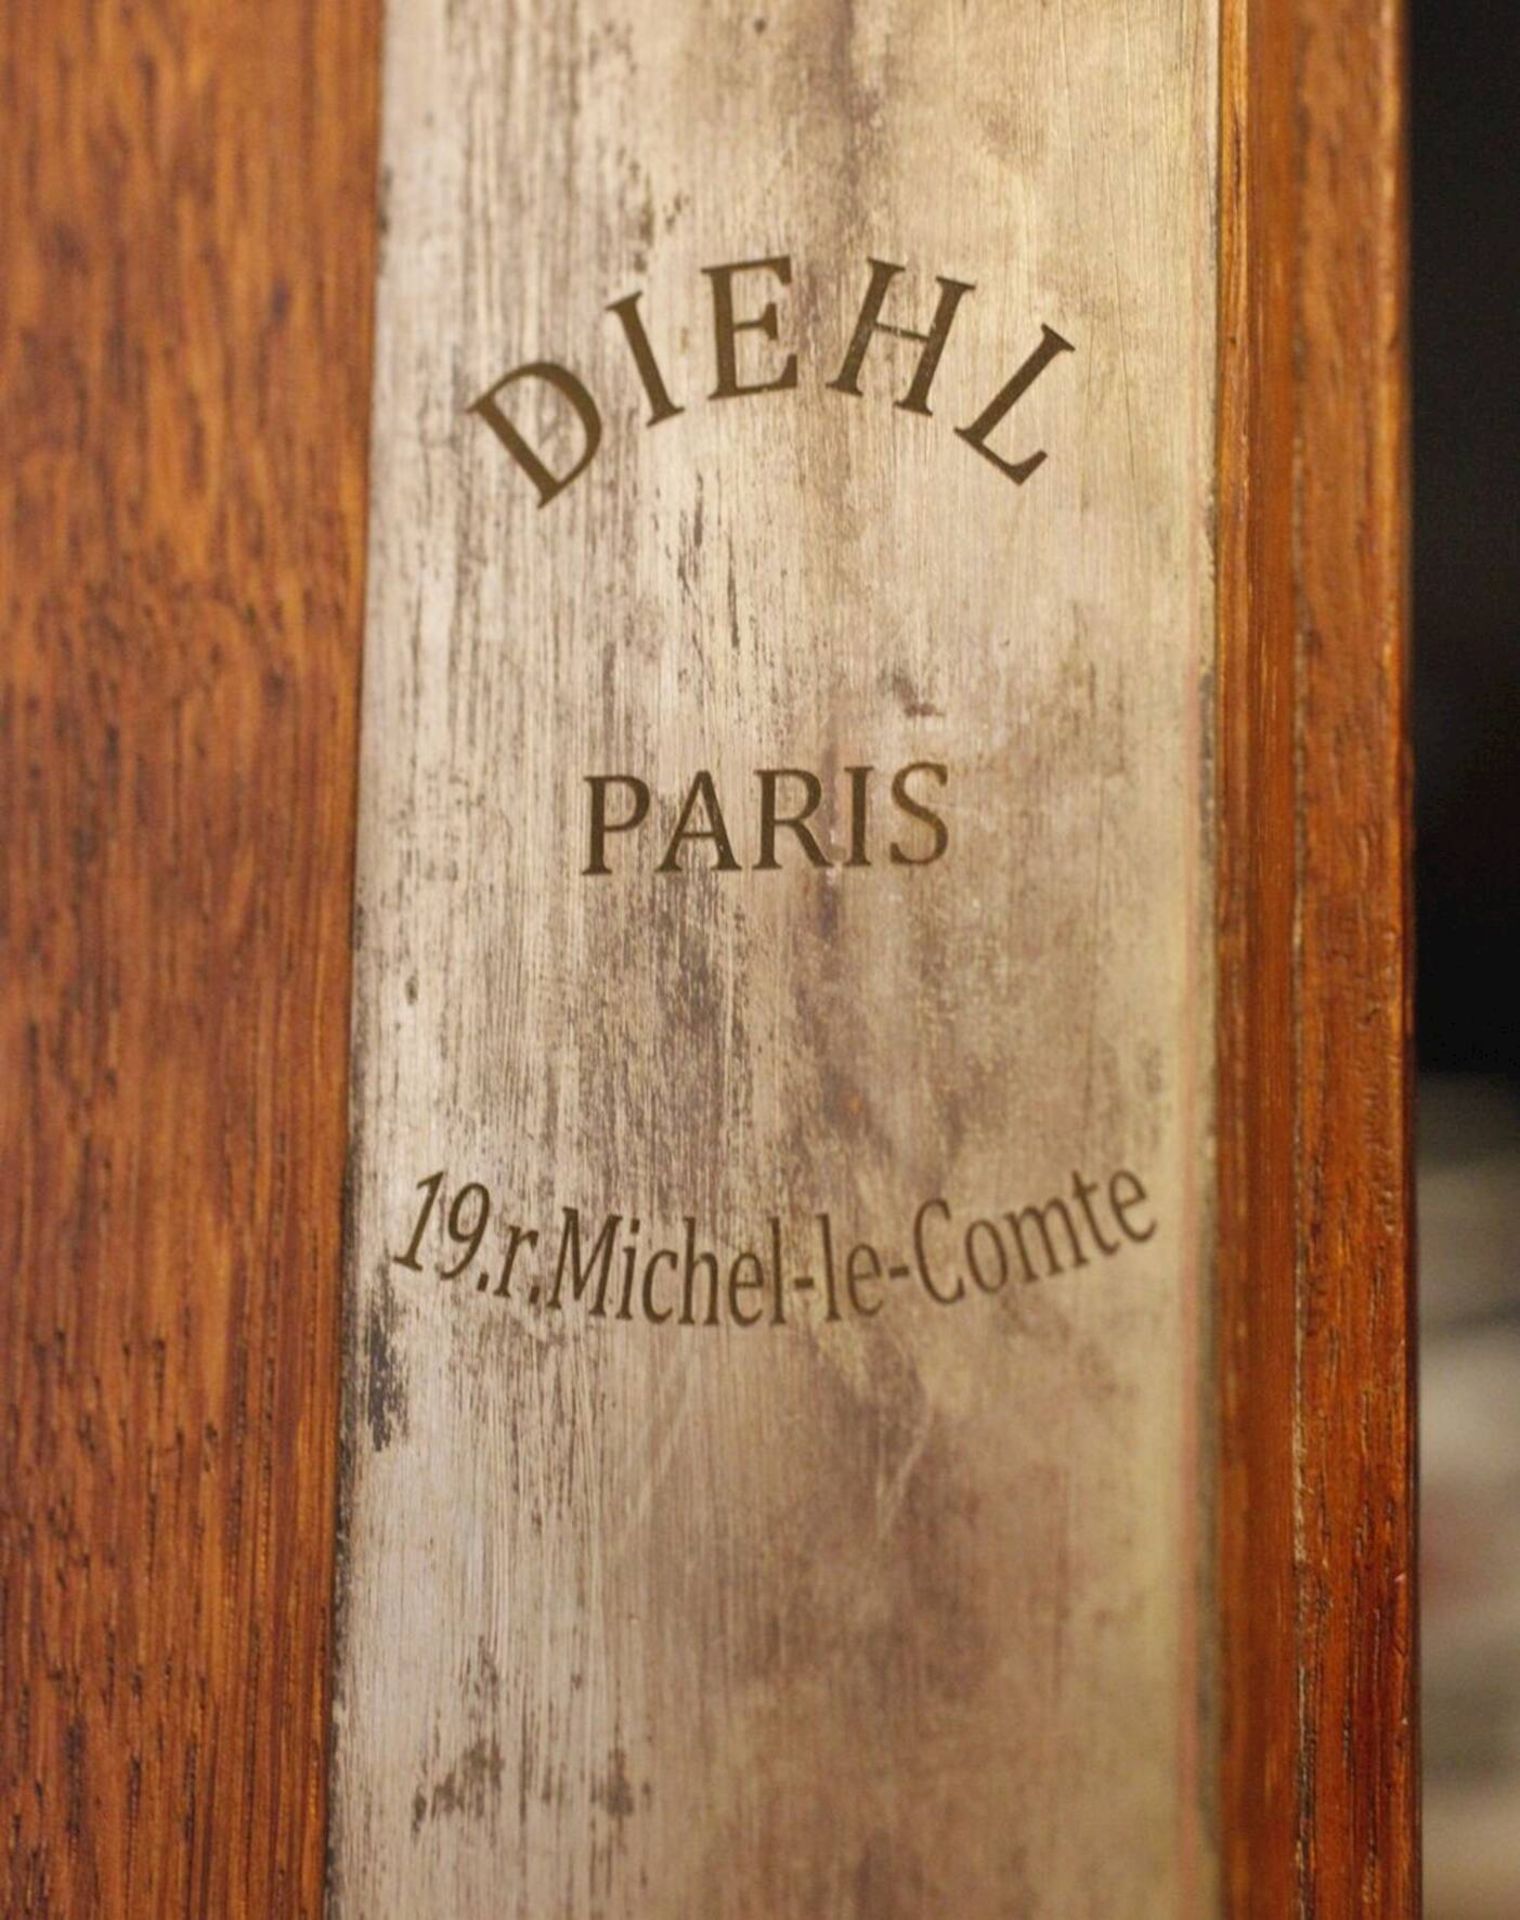 Humidor Guillaume Diehl2. Hälfte 19. Jh., innen gemarkt "Diehl Paris, 19. r. Michel-le-Compte", - Image 15 of 16